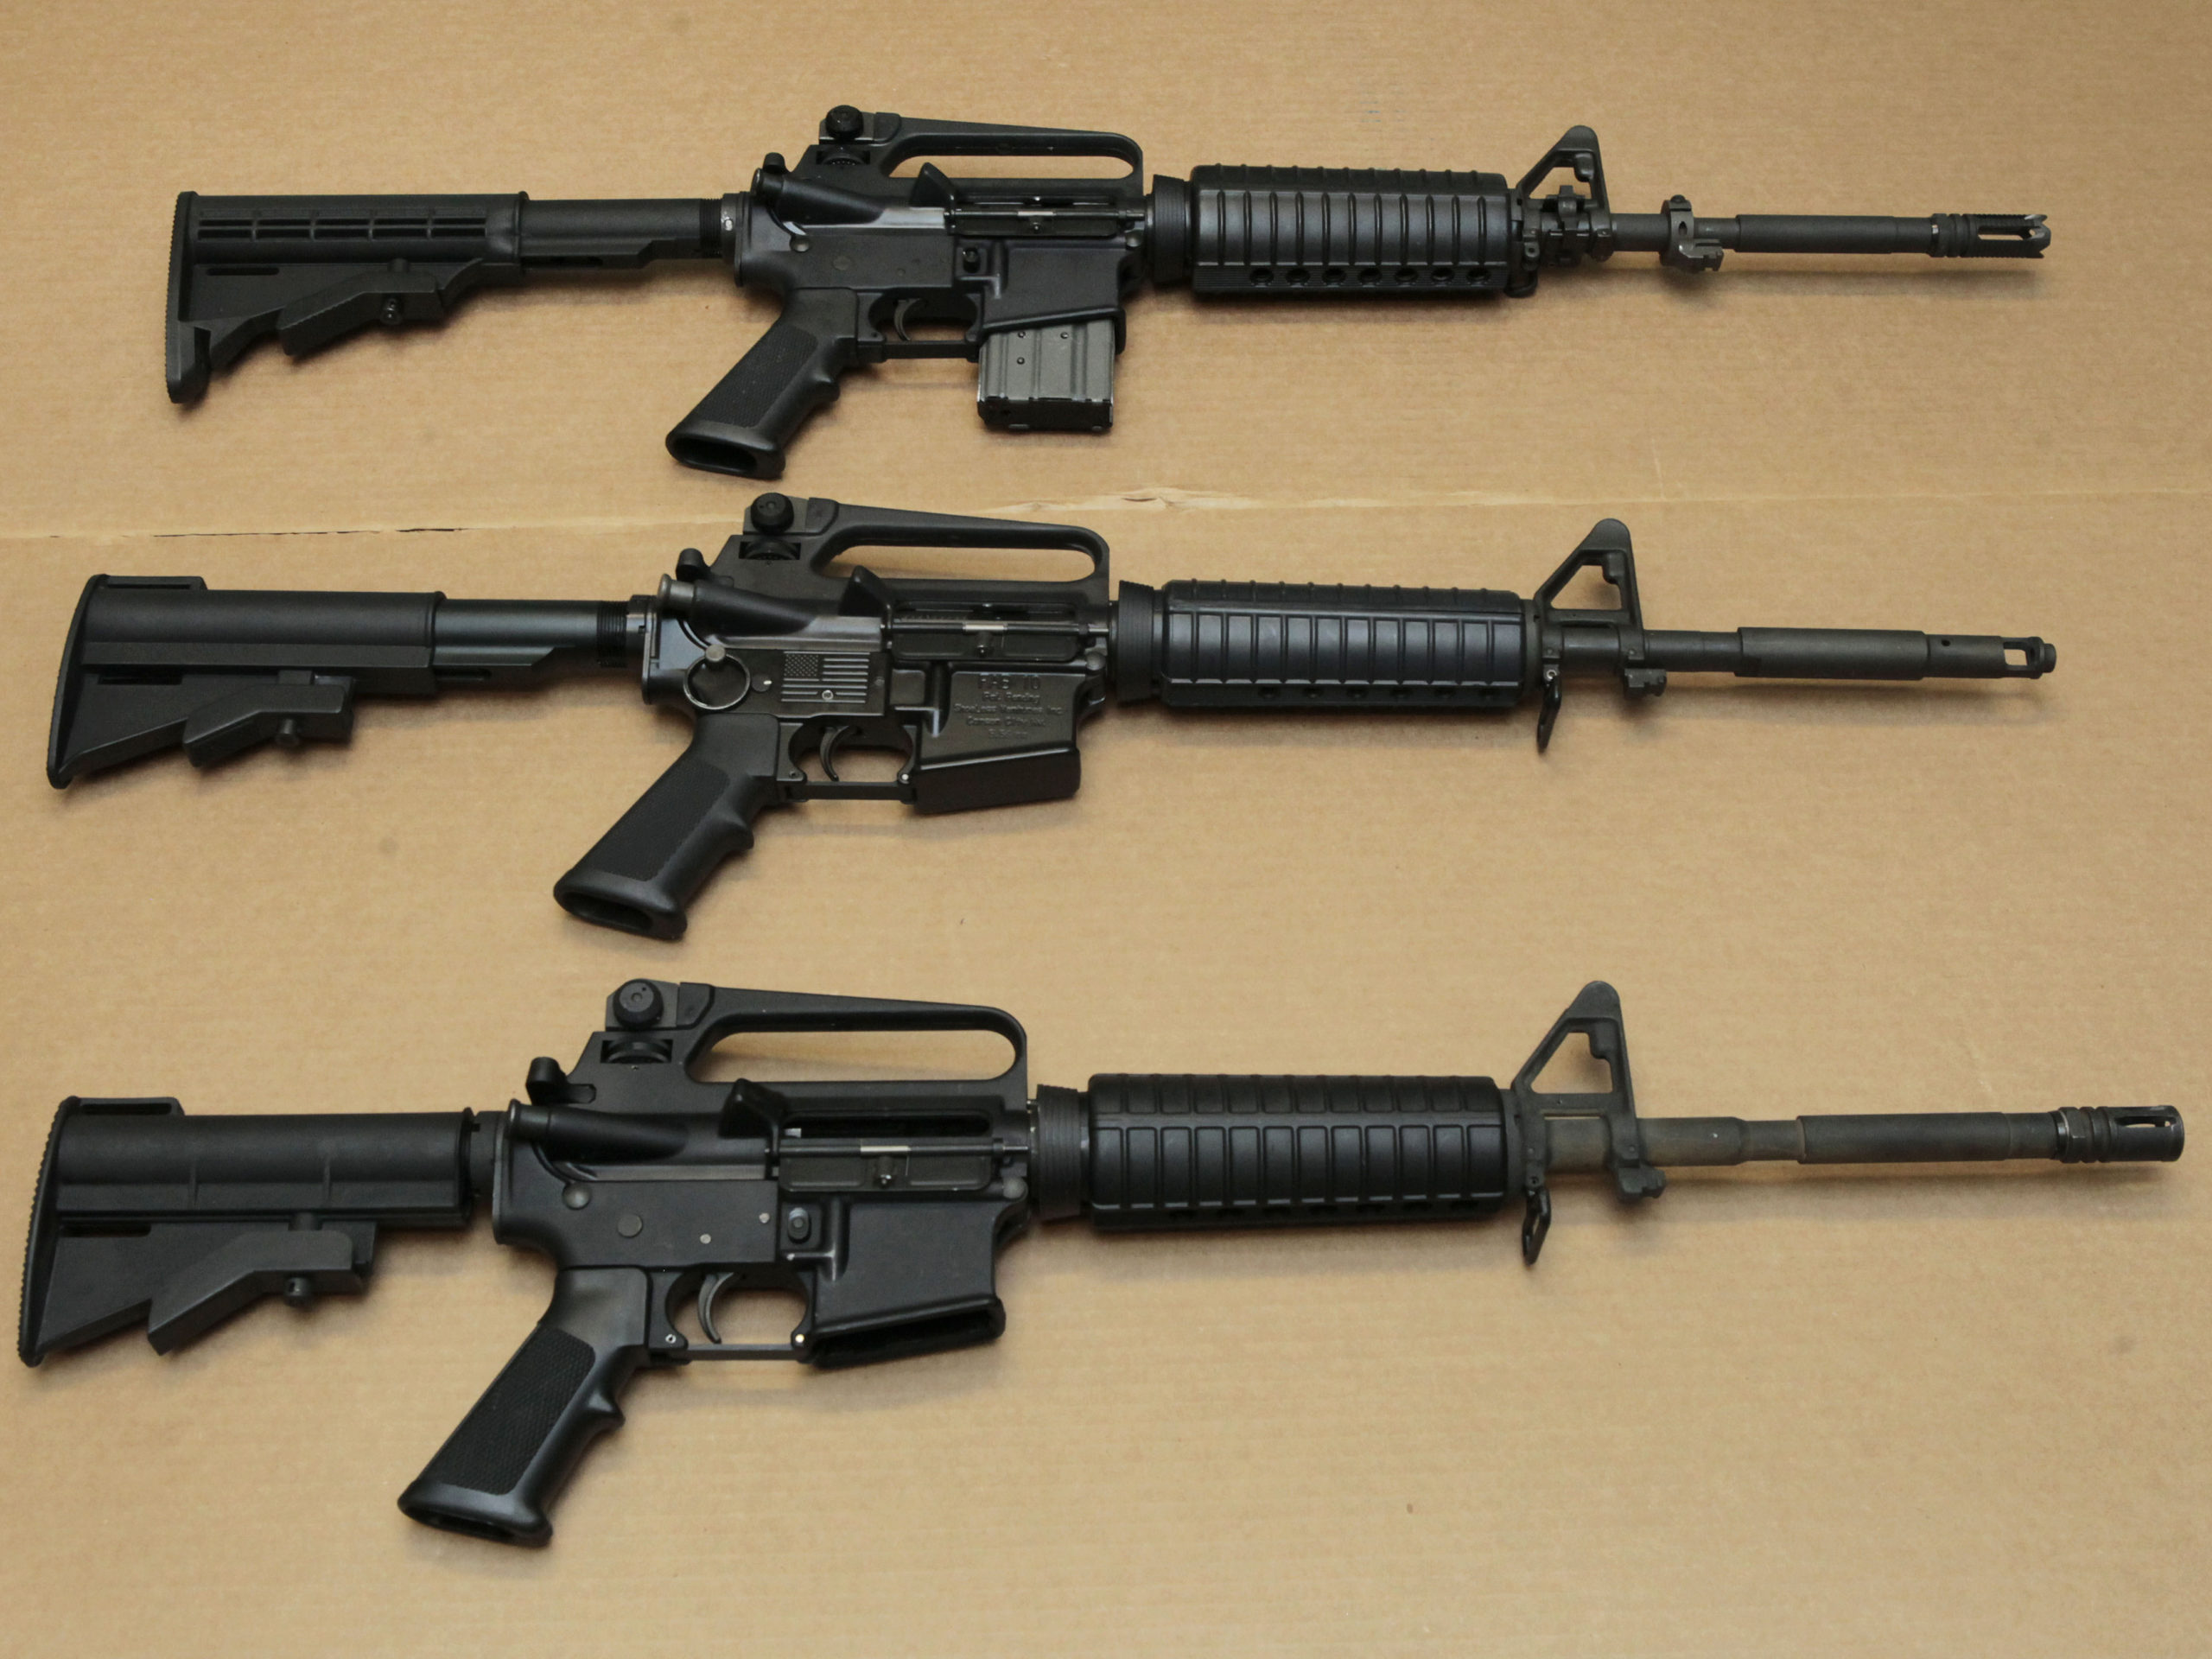 AR-15 rifles for sale